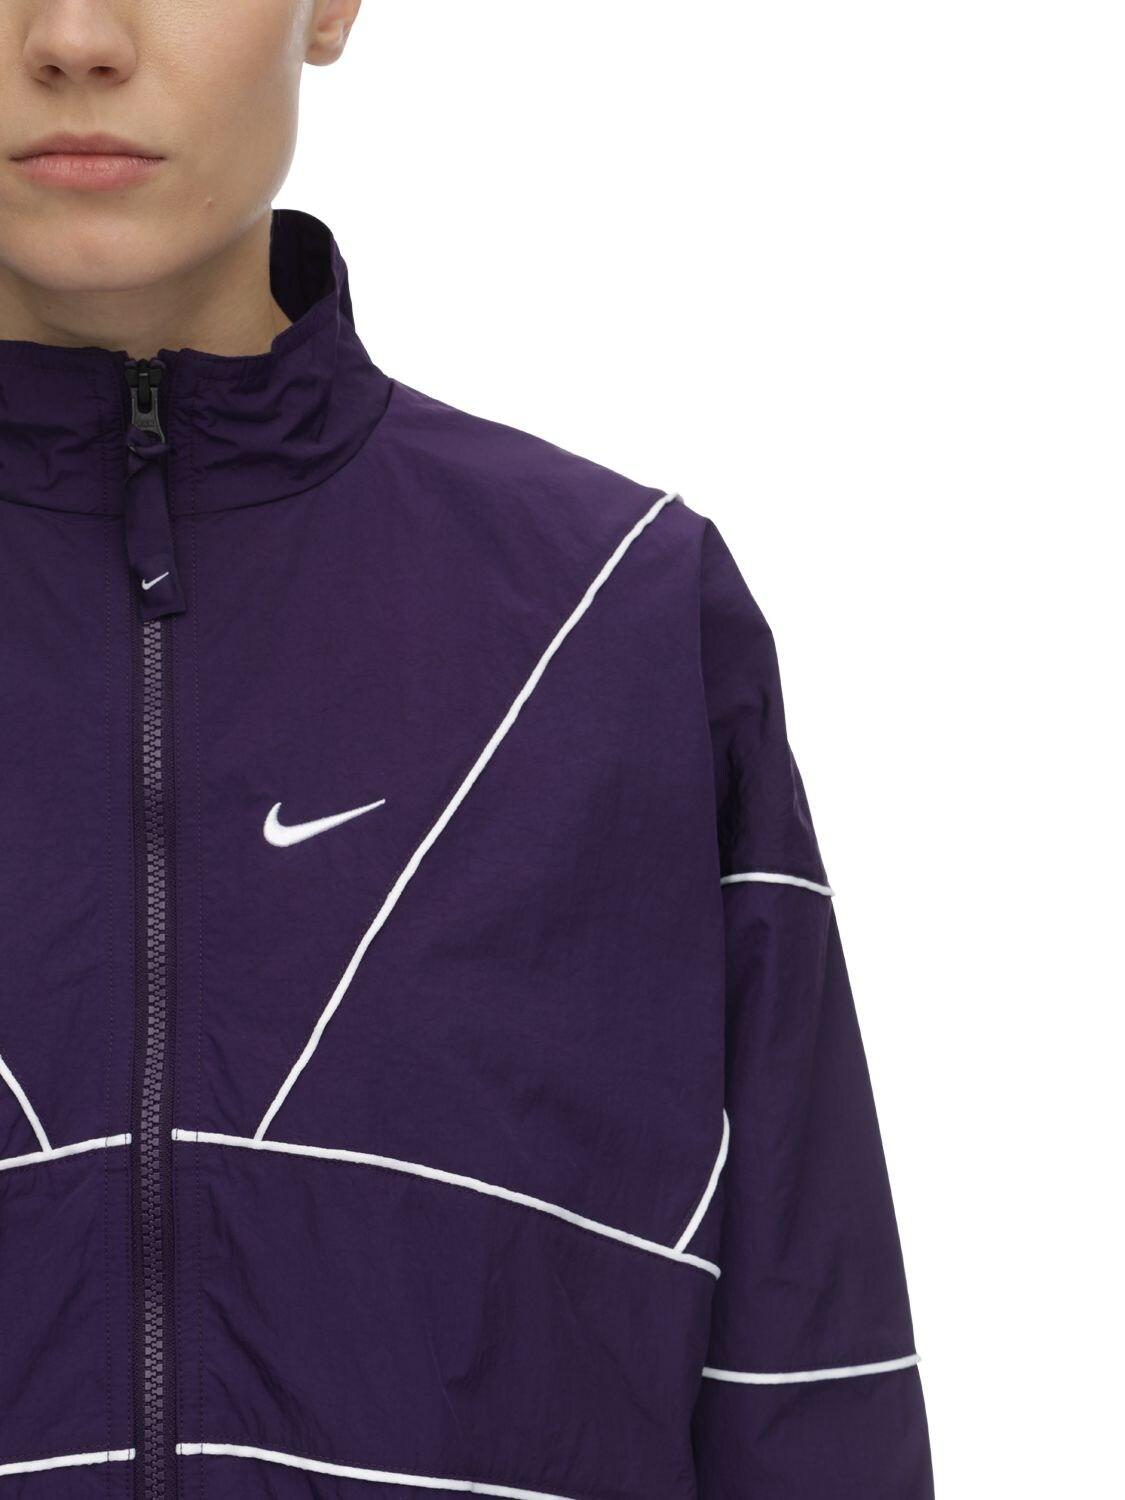 Nike Nrg Track Jacket in Grand Purple (Purple) | Lyst